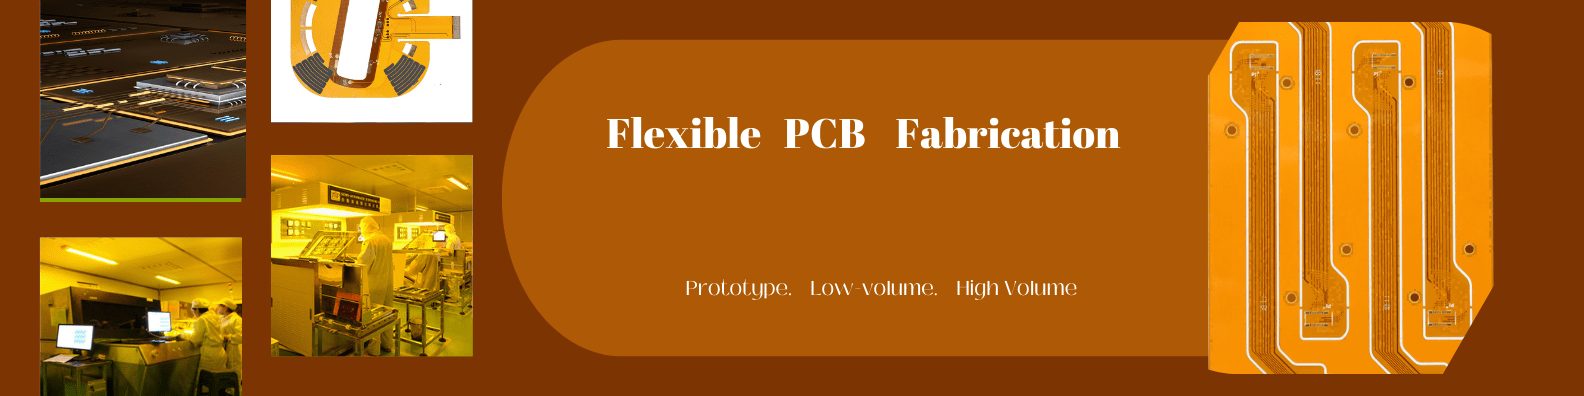 Flexible PCB fabrication (1)